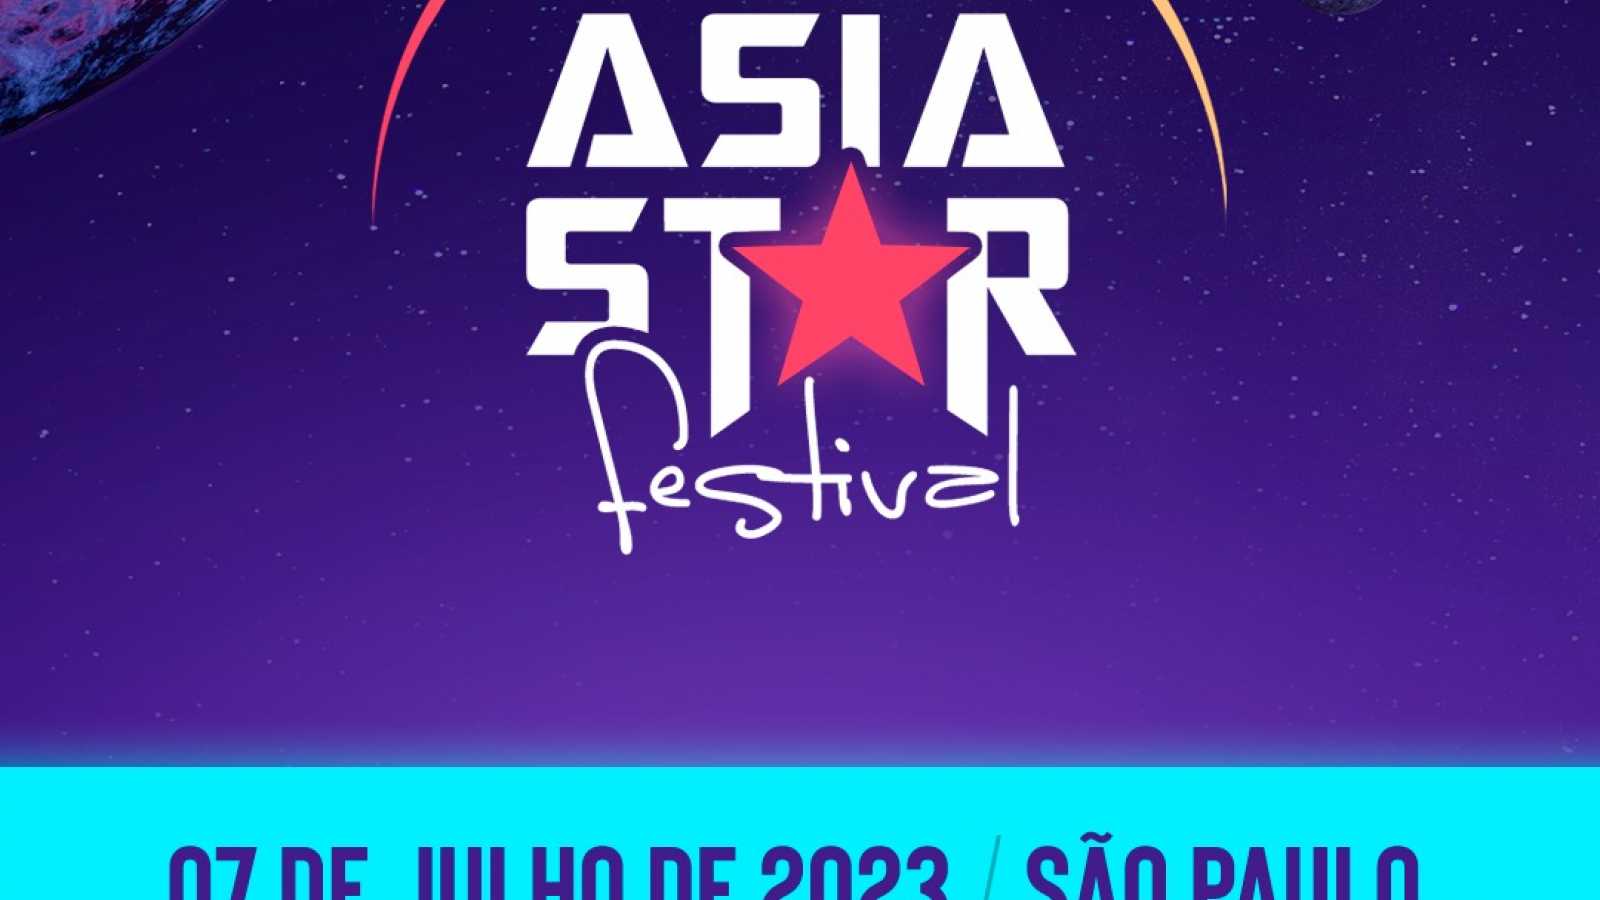 Highway Star anuncia festival inédito no Brasil: Asia Star Festival © Highway Star